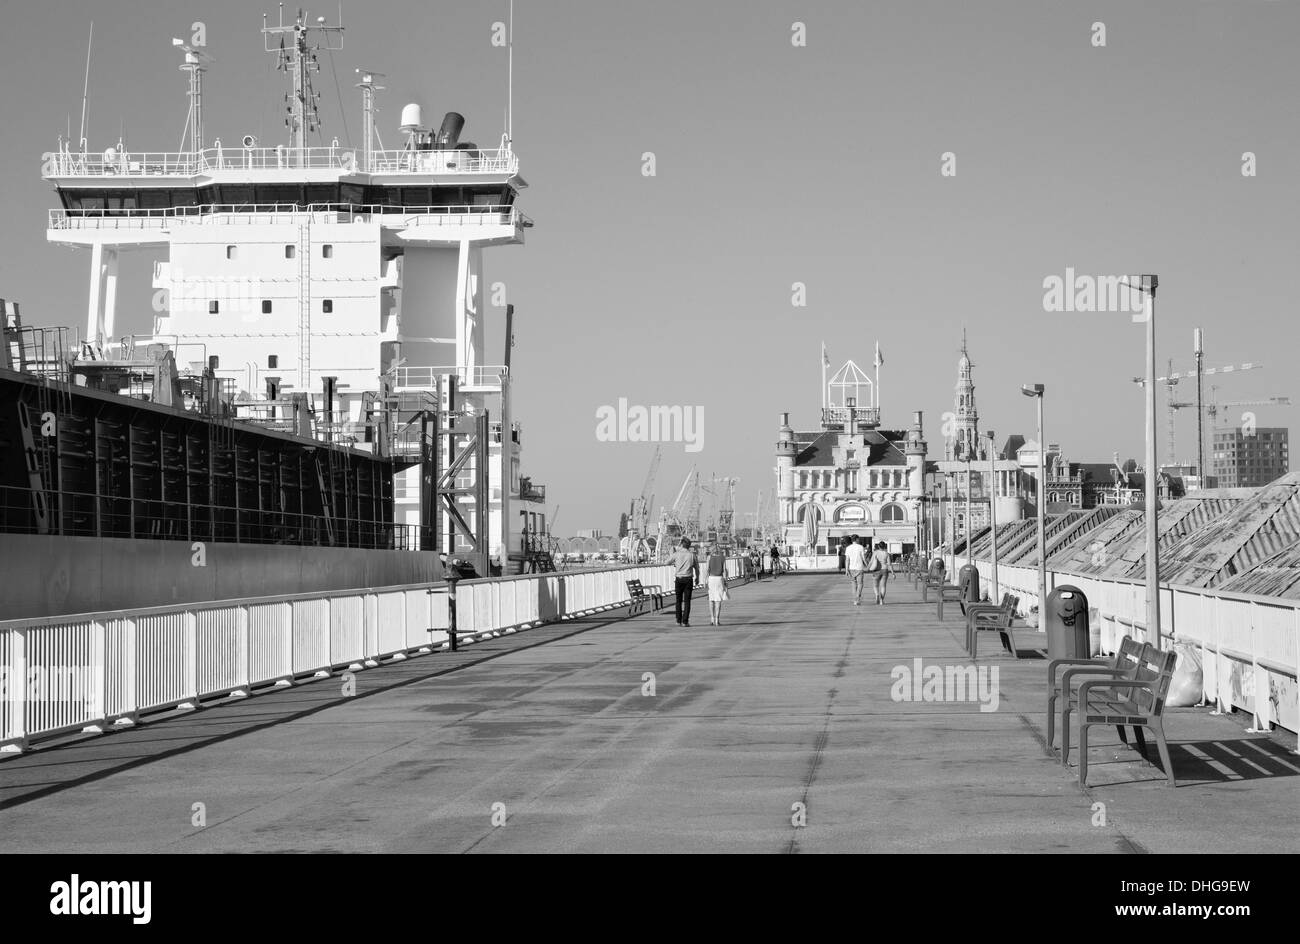 ANTWERP, BELGIUM - SEPTEMBER 5: Promenade and big cargo boat on September 5, 2013 in Antwerp, Belgium Stock Photo